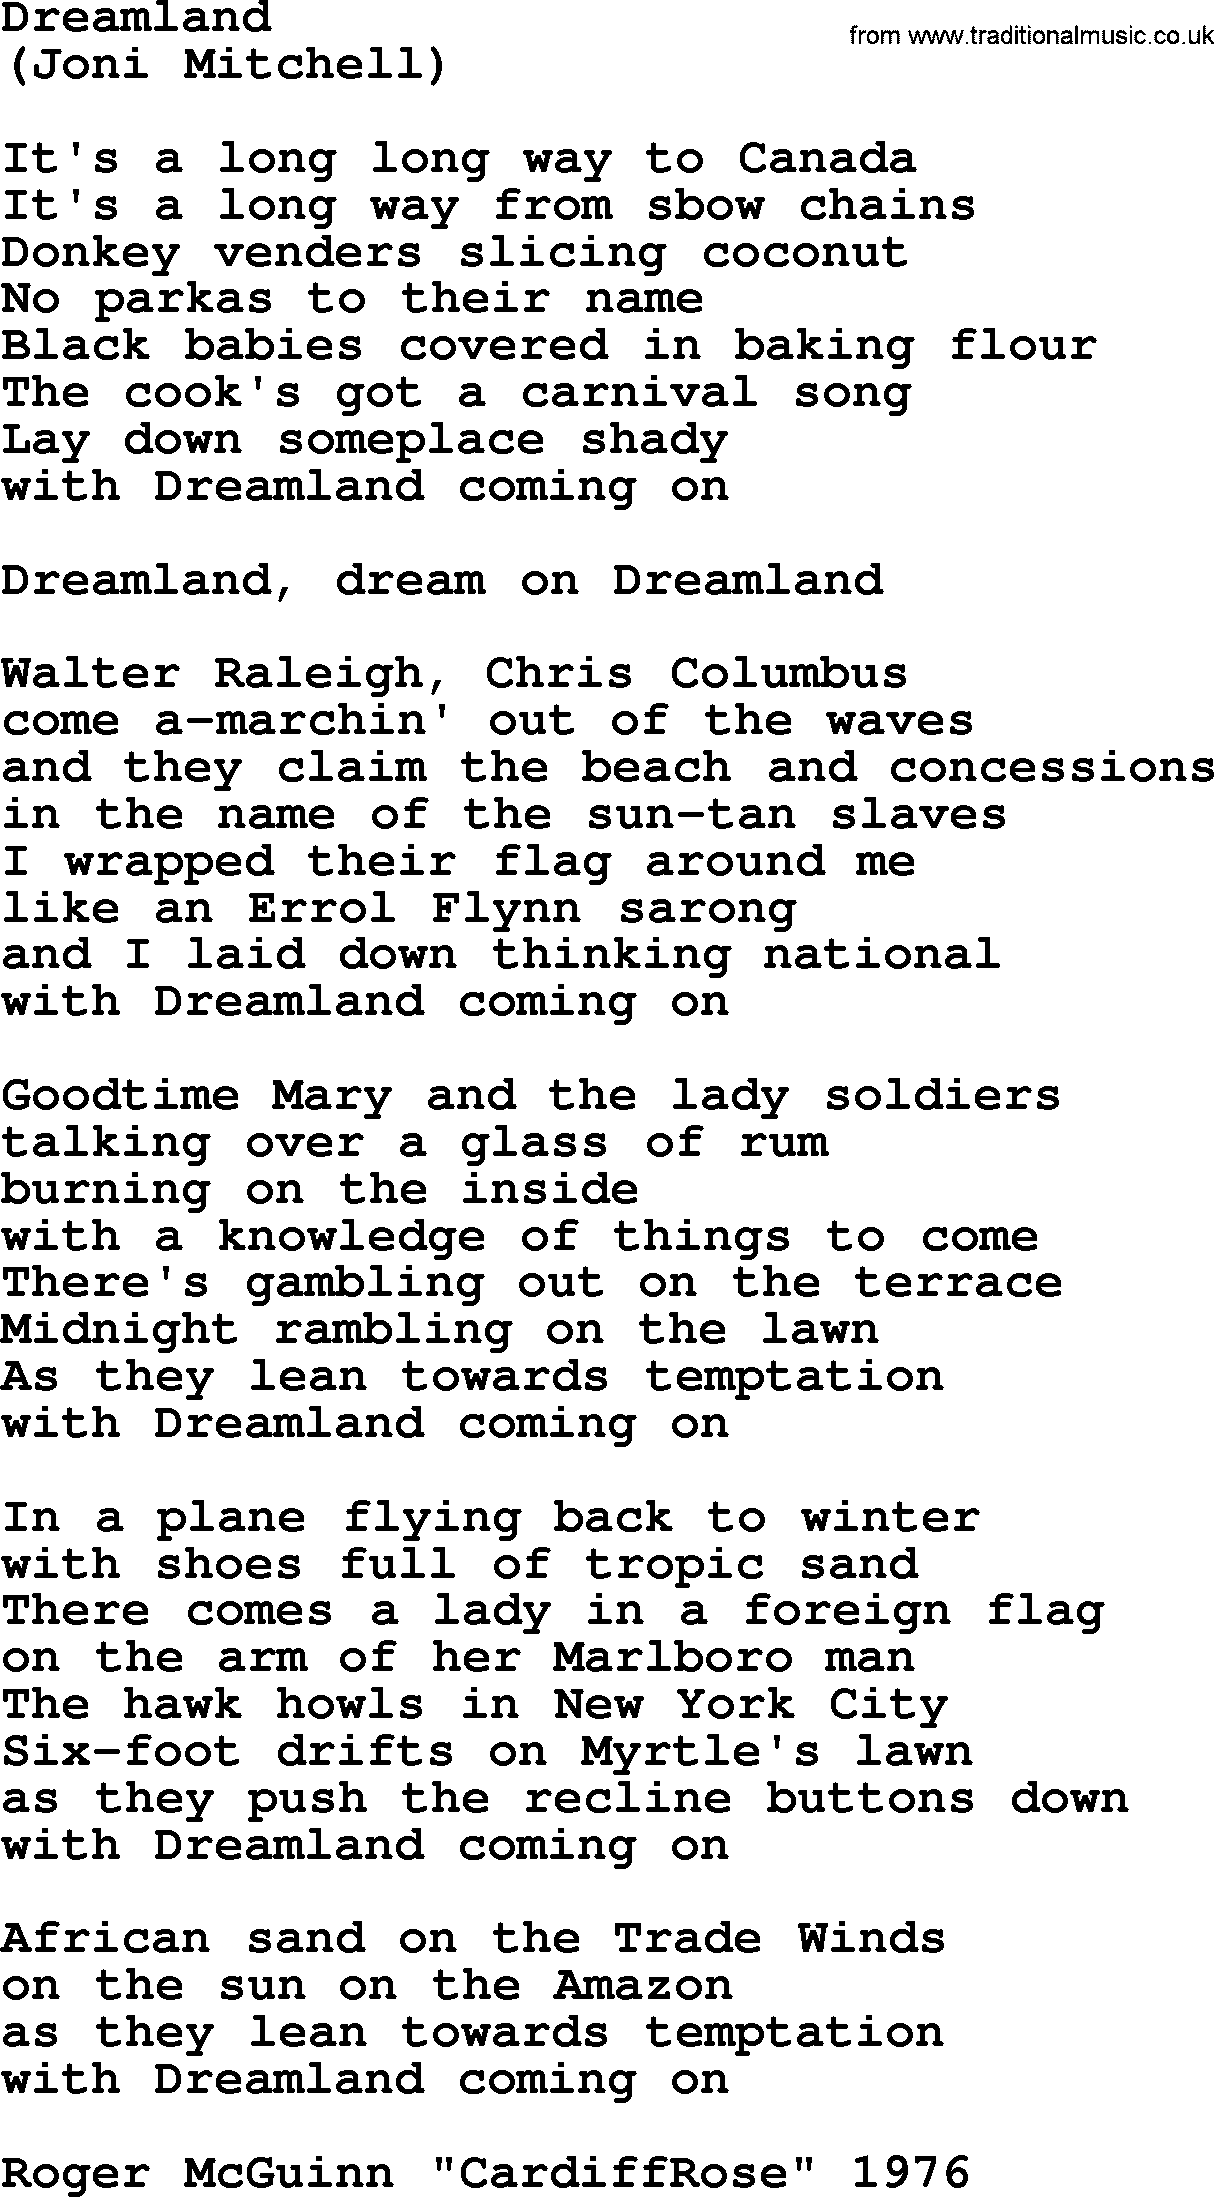 The Byrds song Dreamland, lyrics